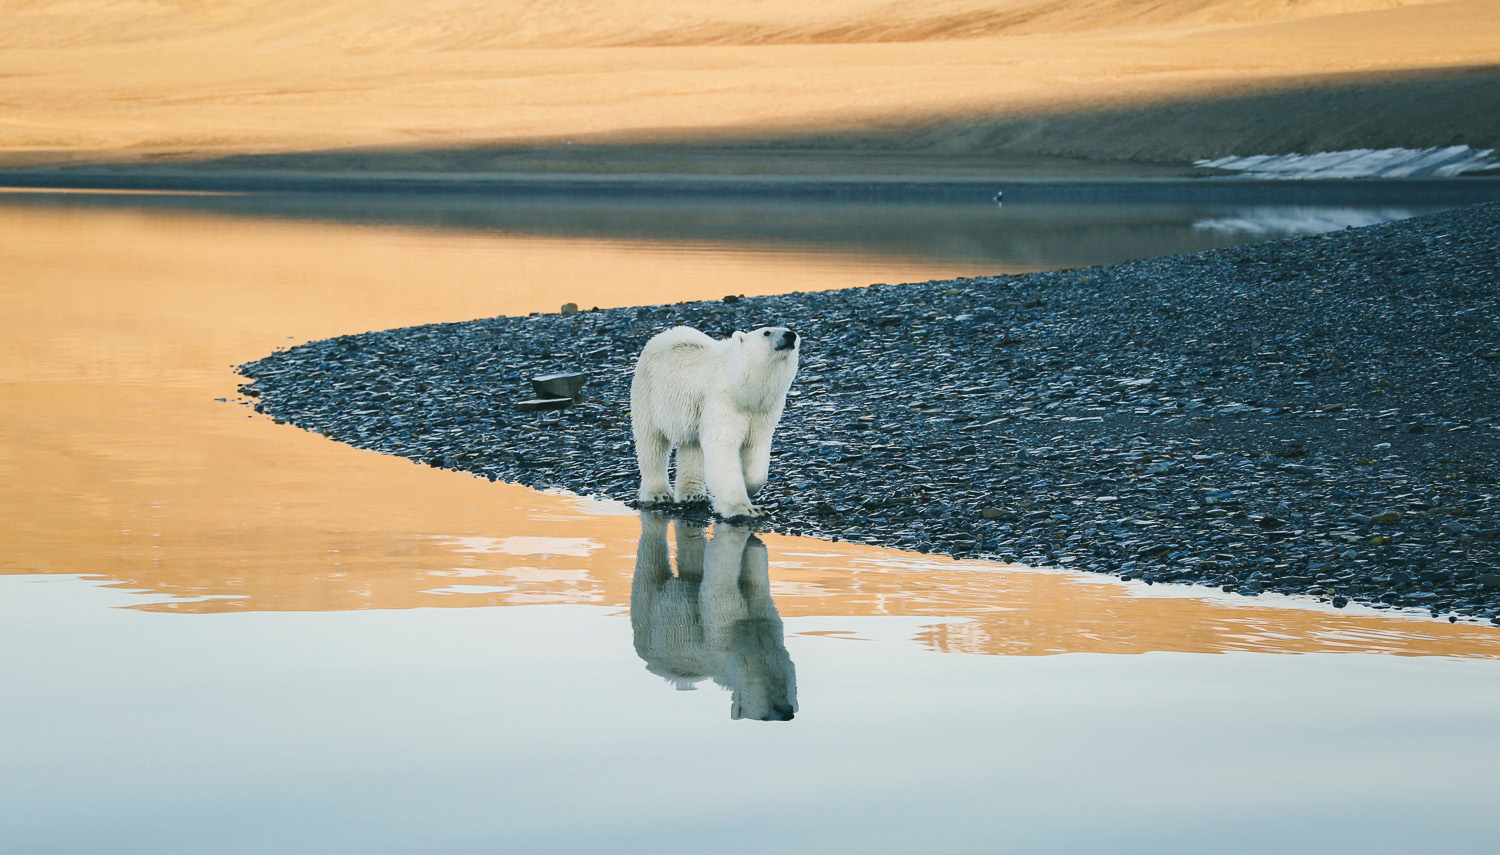 The Northwest passage - Discover the world - Latitude - Ice bear